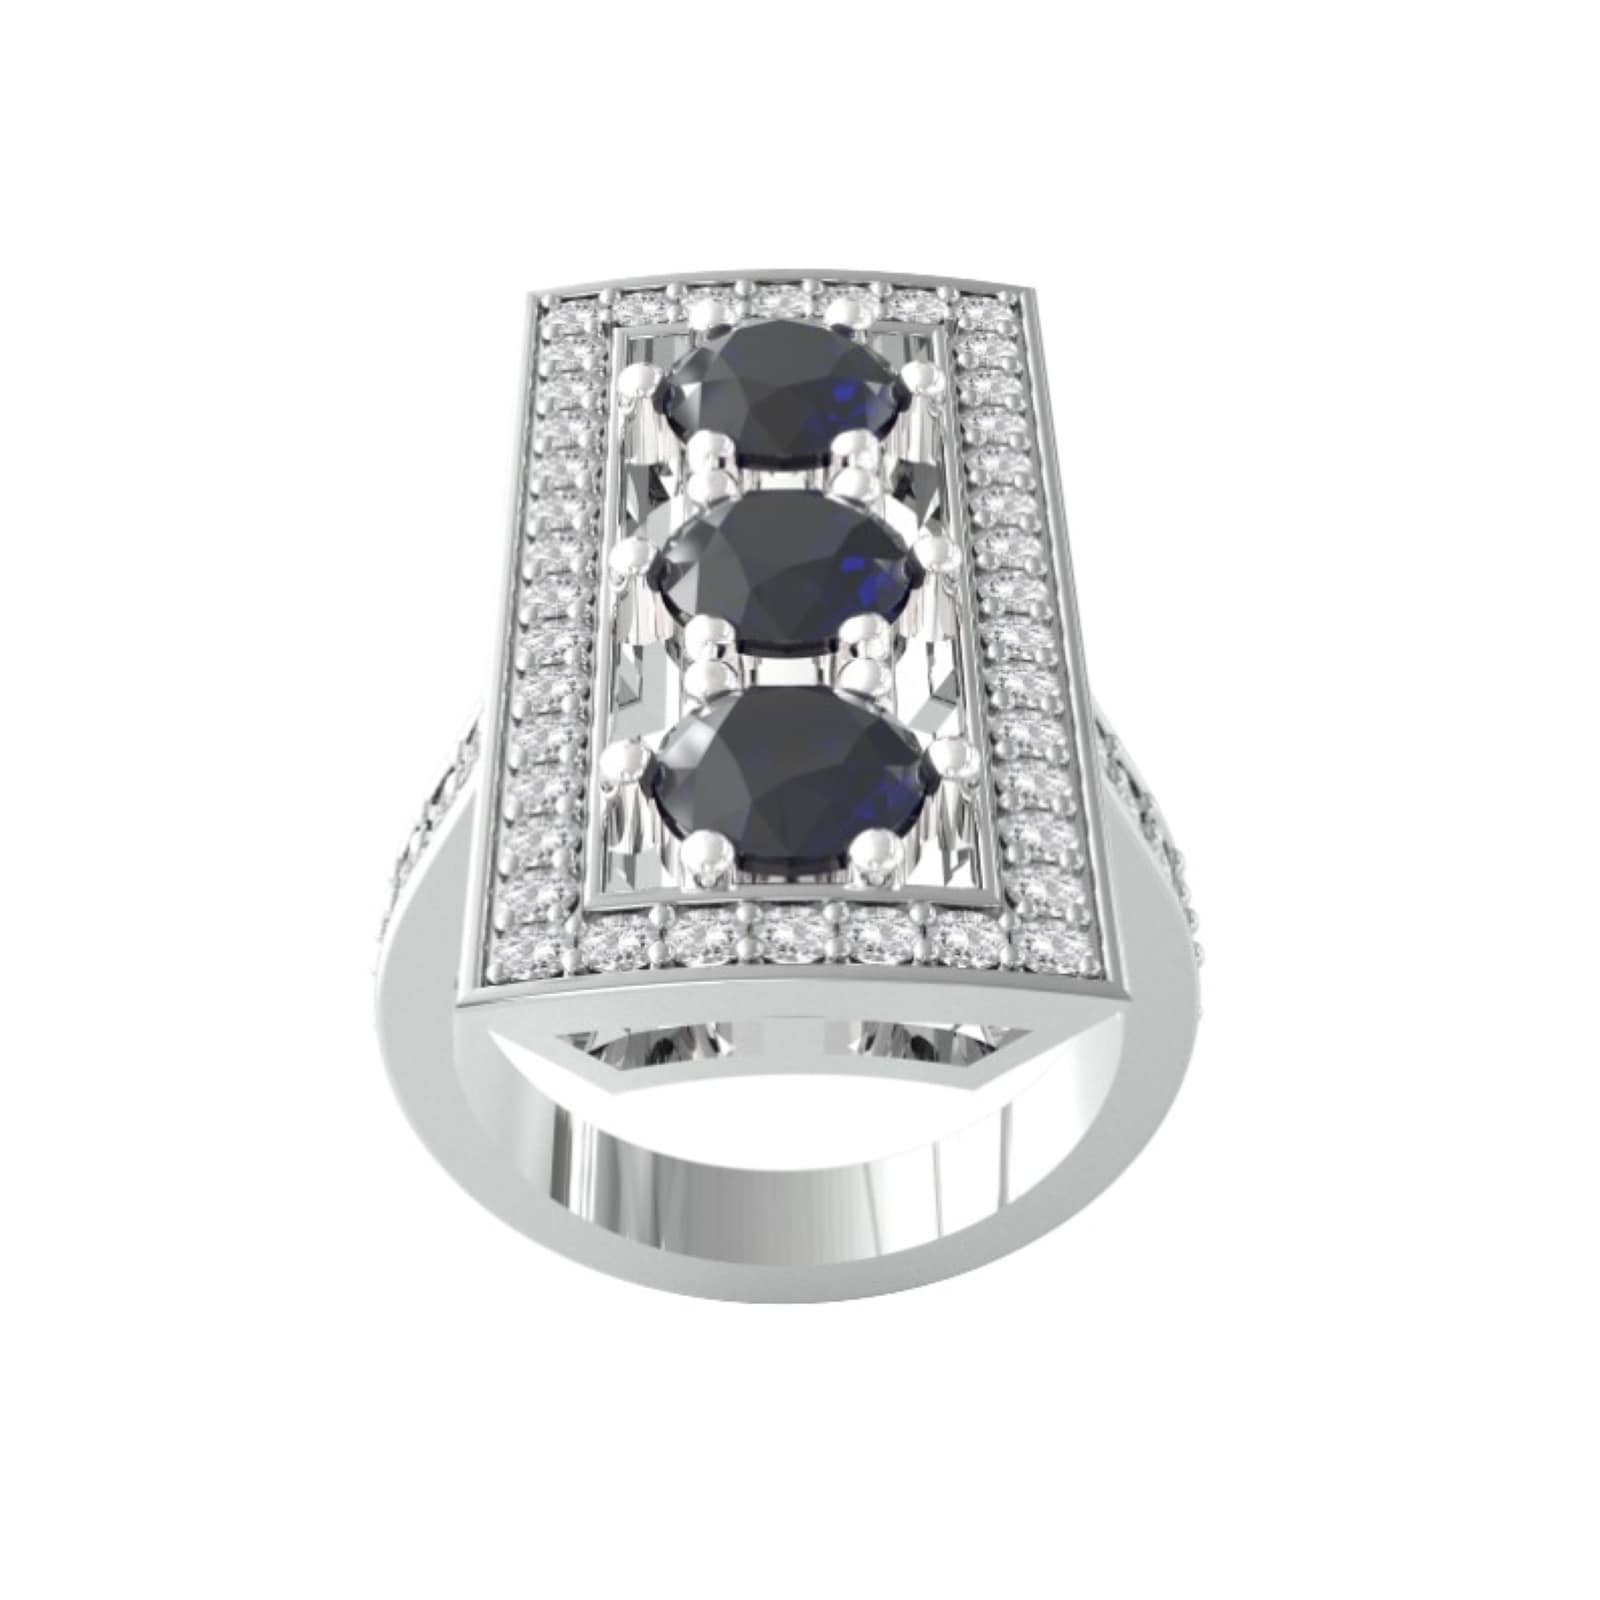 18ct White Gold Art Deco Sapphire & Diamond Plaque Ring - Ring Size J.5